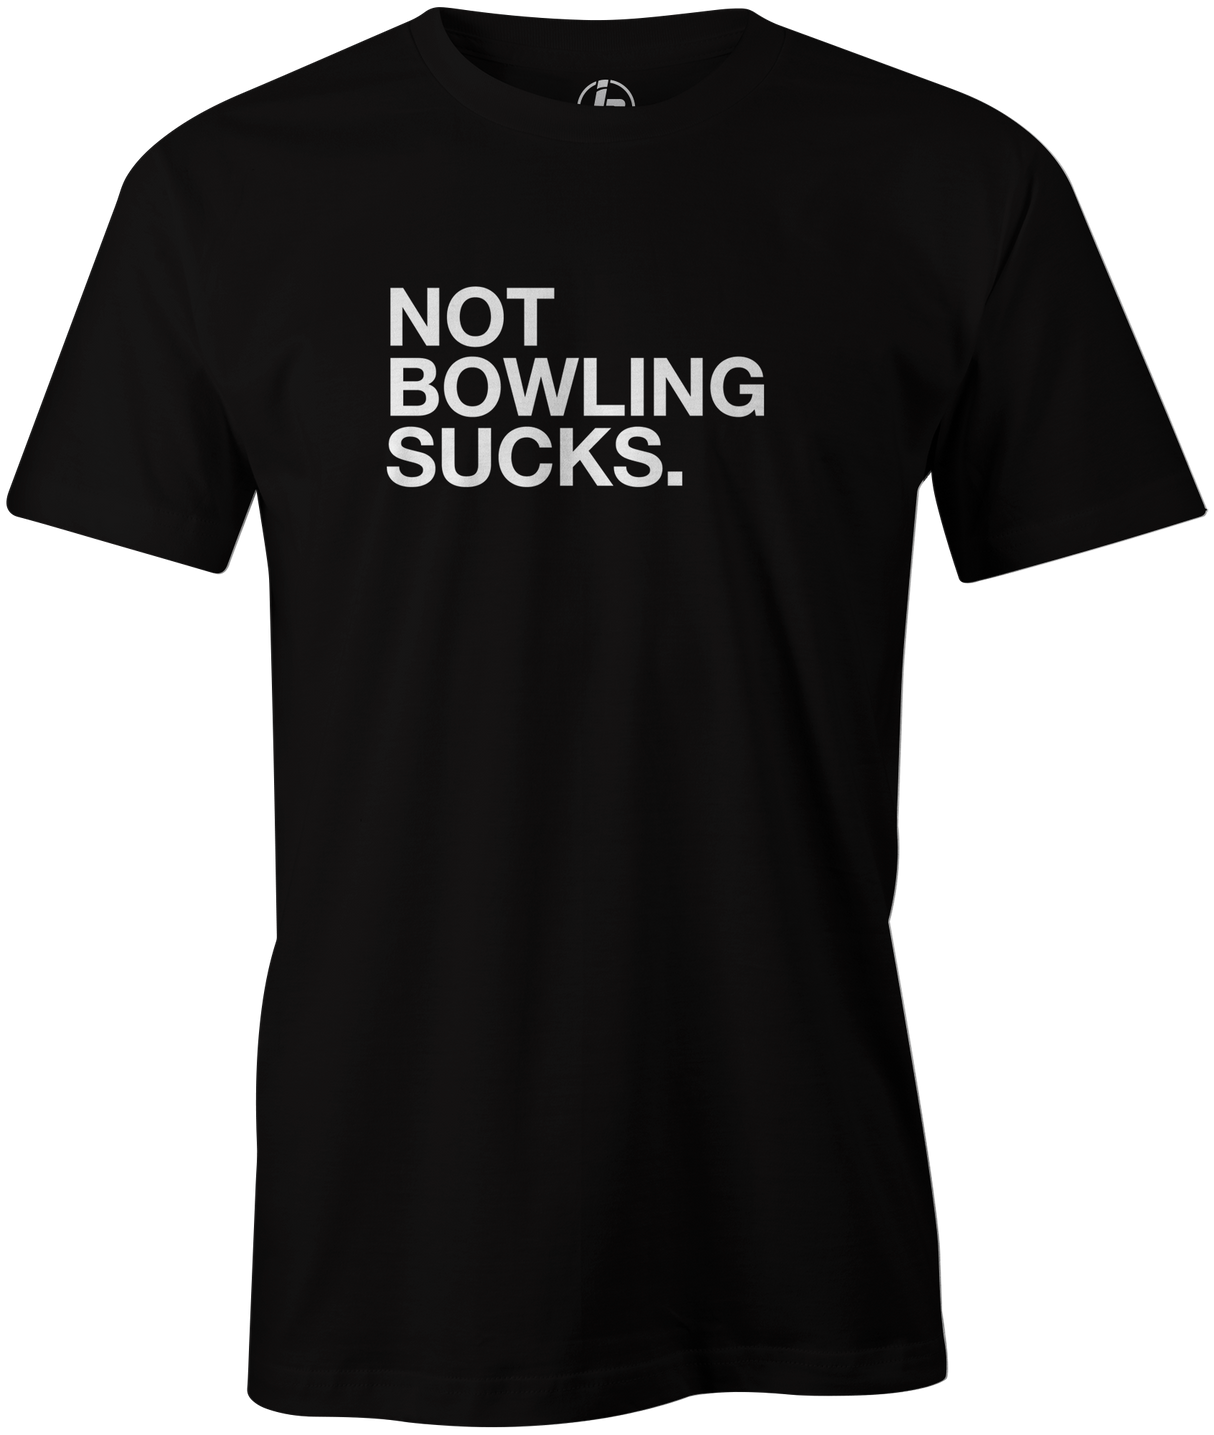 Not Bowling Sucks Men's T-Shirt, Black, cool, funny, tshirt, tee, tee shirt, tee-shirt, league bowling, team bowling, ebonite, hammer, track, columbia 300, storm, roto grip, brunswick, radical, dv8, motiv.